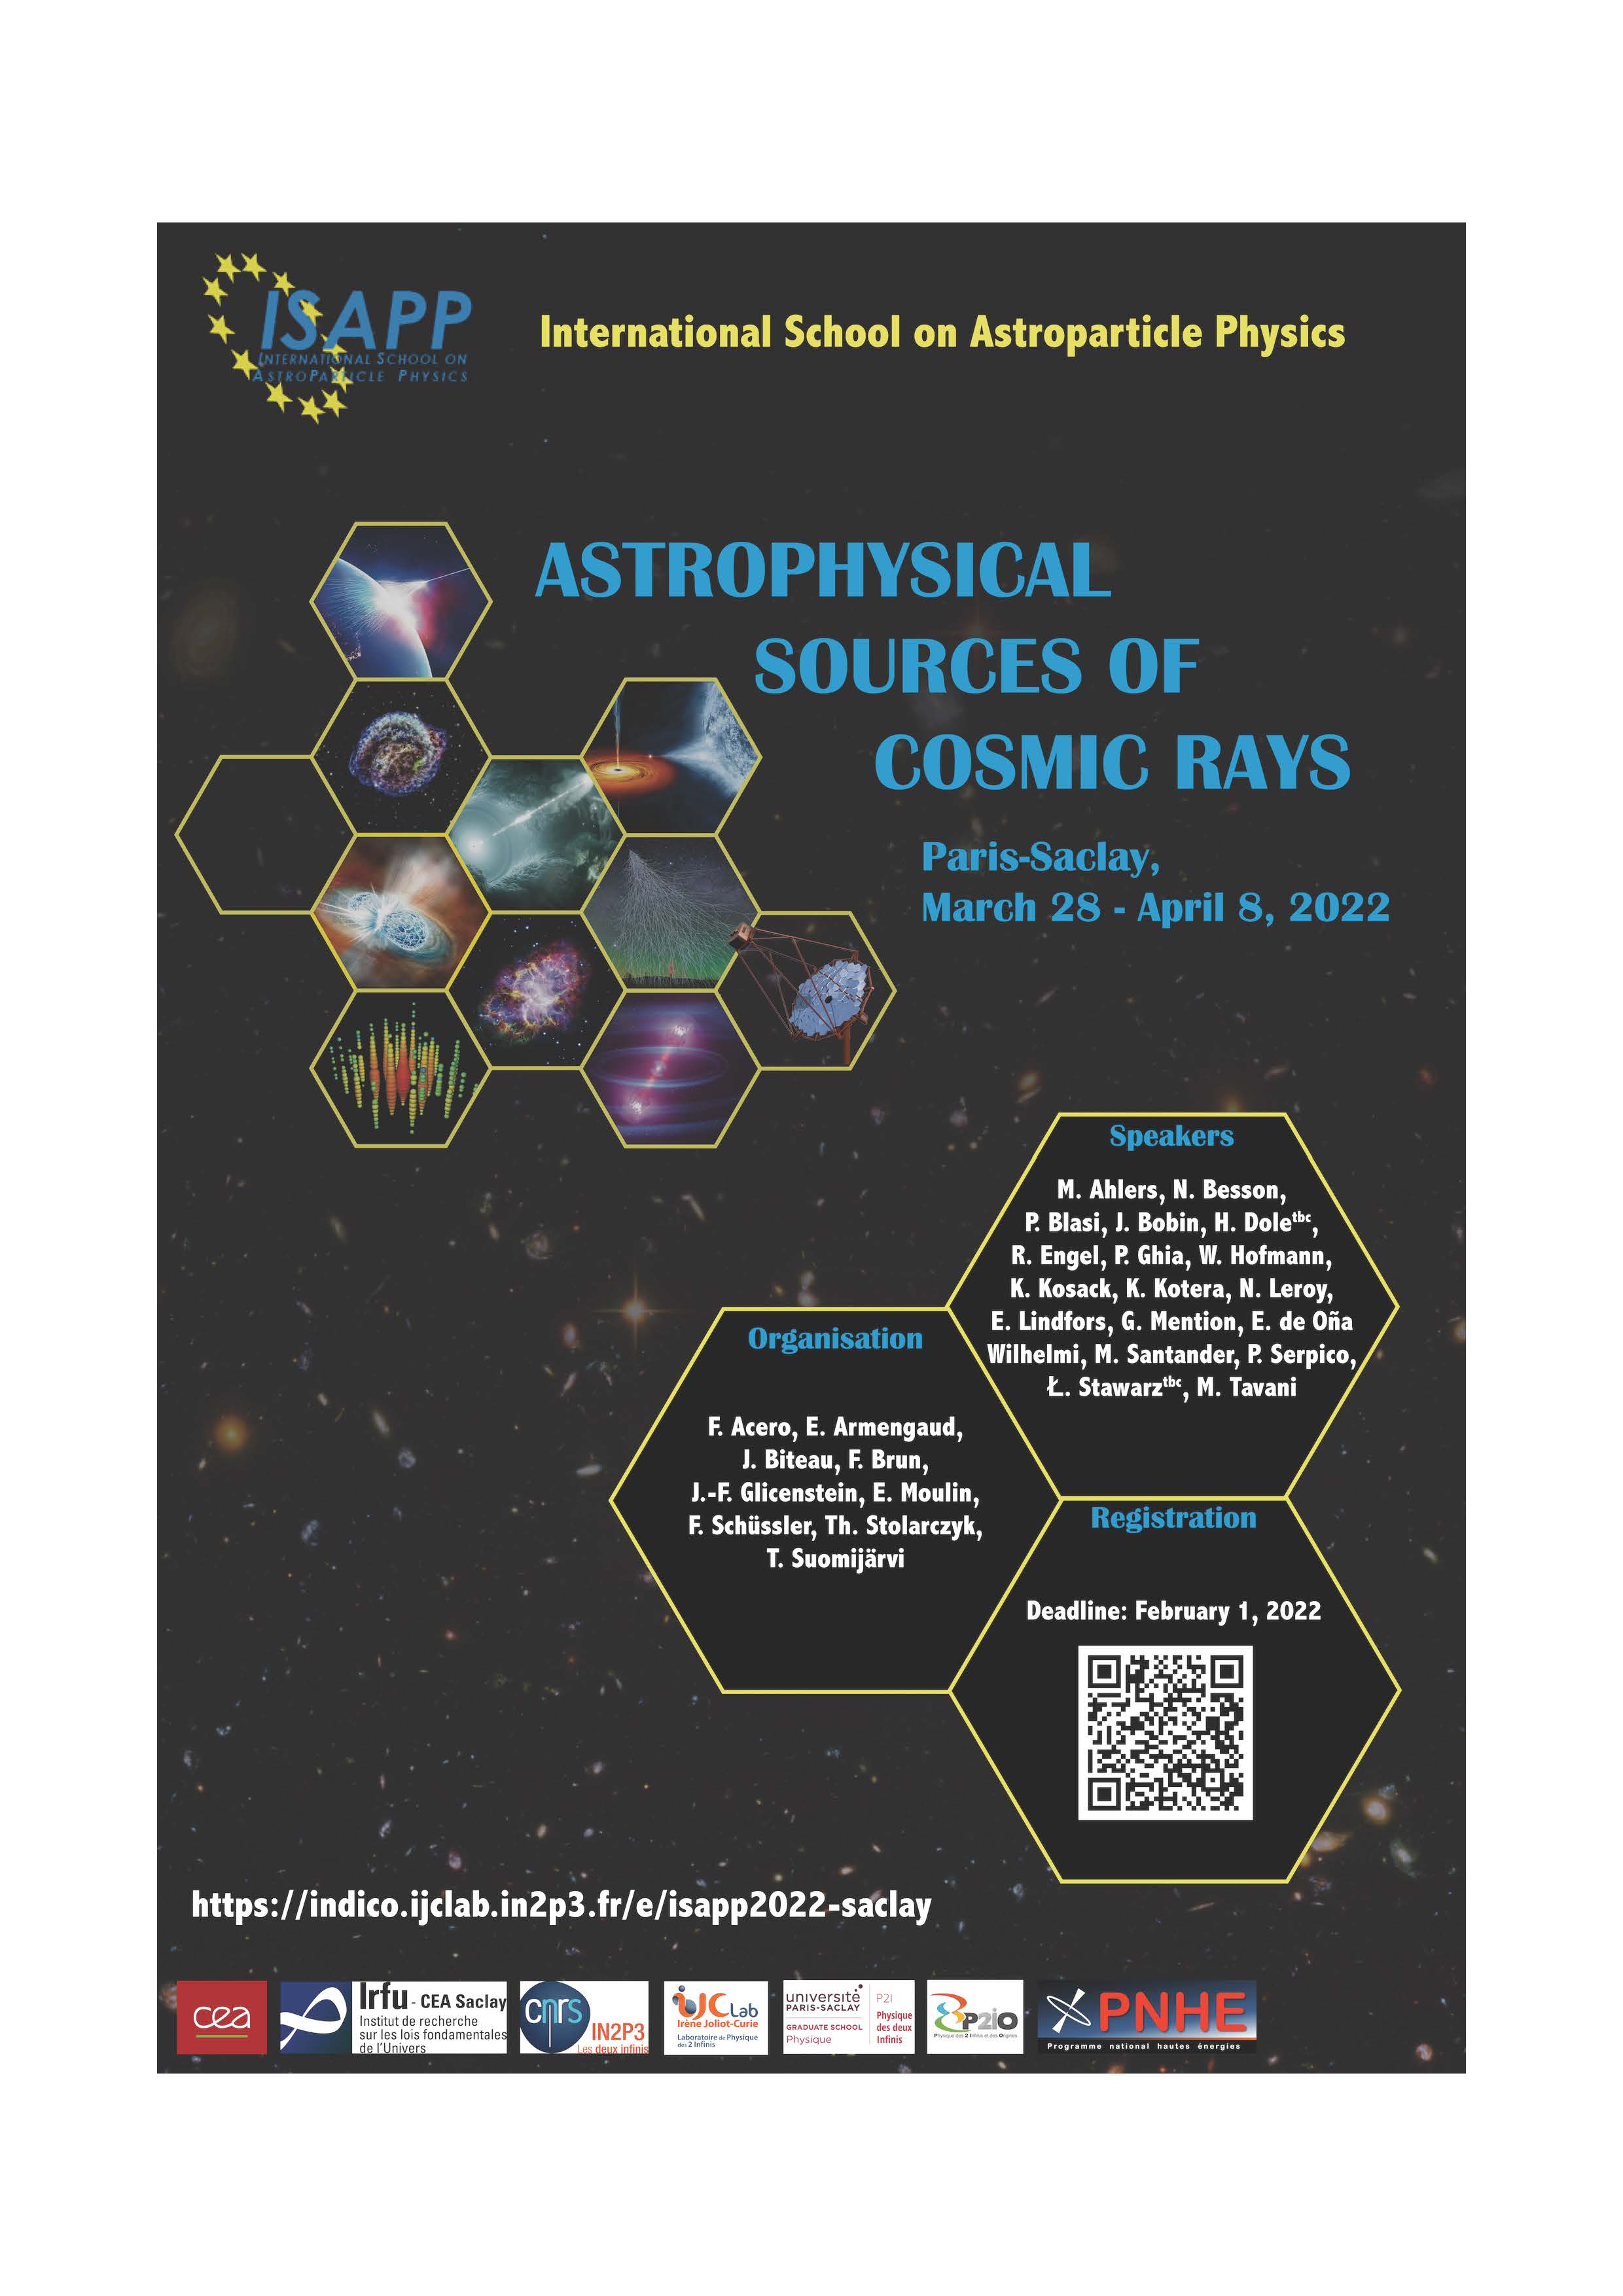 Ecole ISAPP 2022 : Astrophysical sources of cosmic rays du 28 mars 2022 au 8 avril 2022: inscrivez-vous!